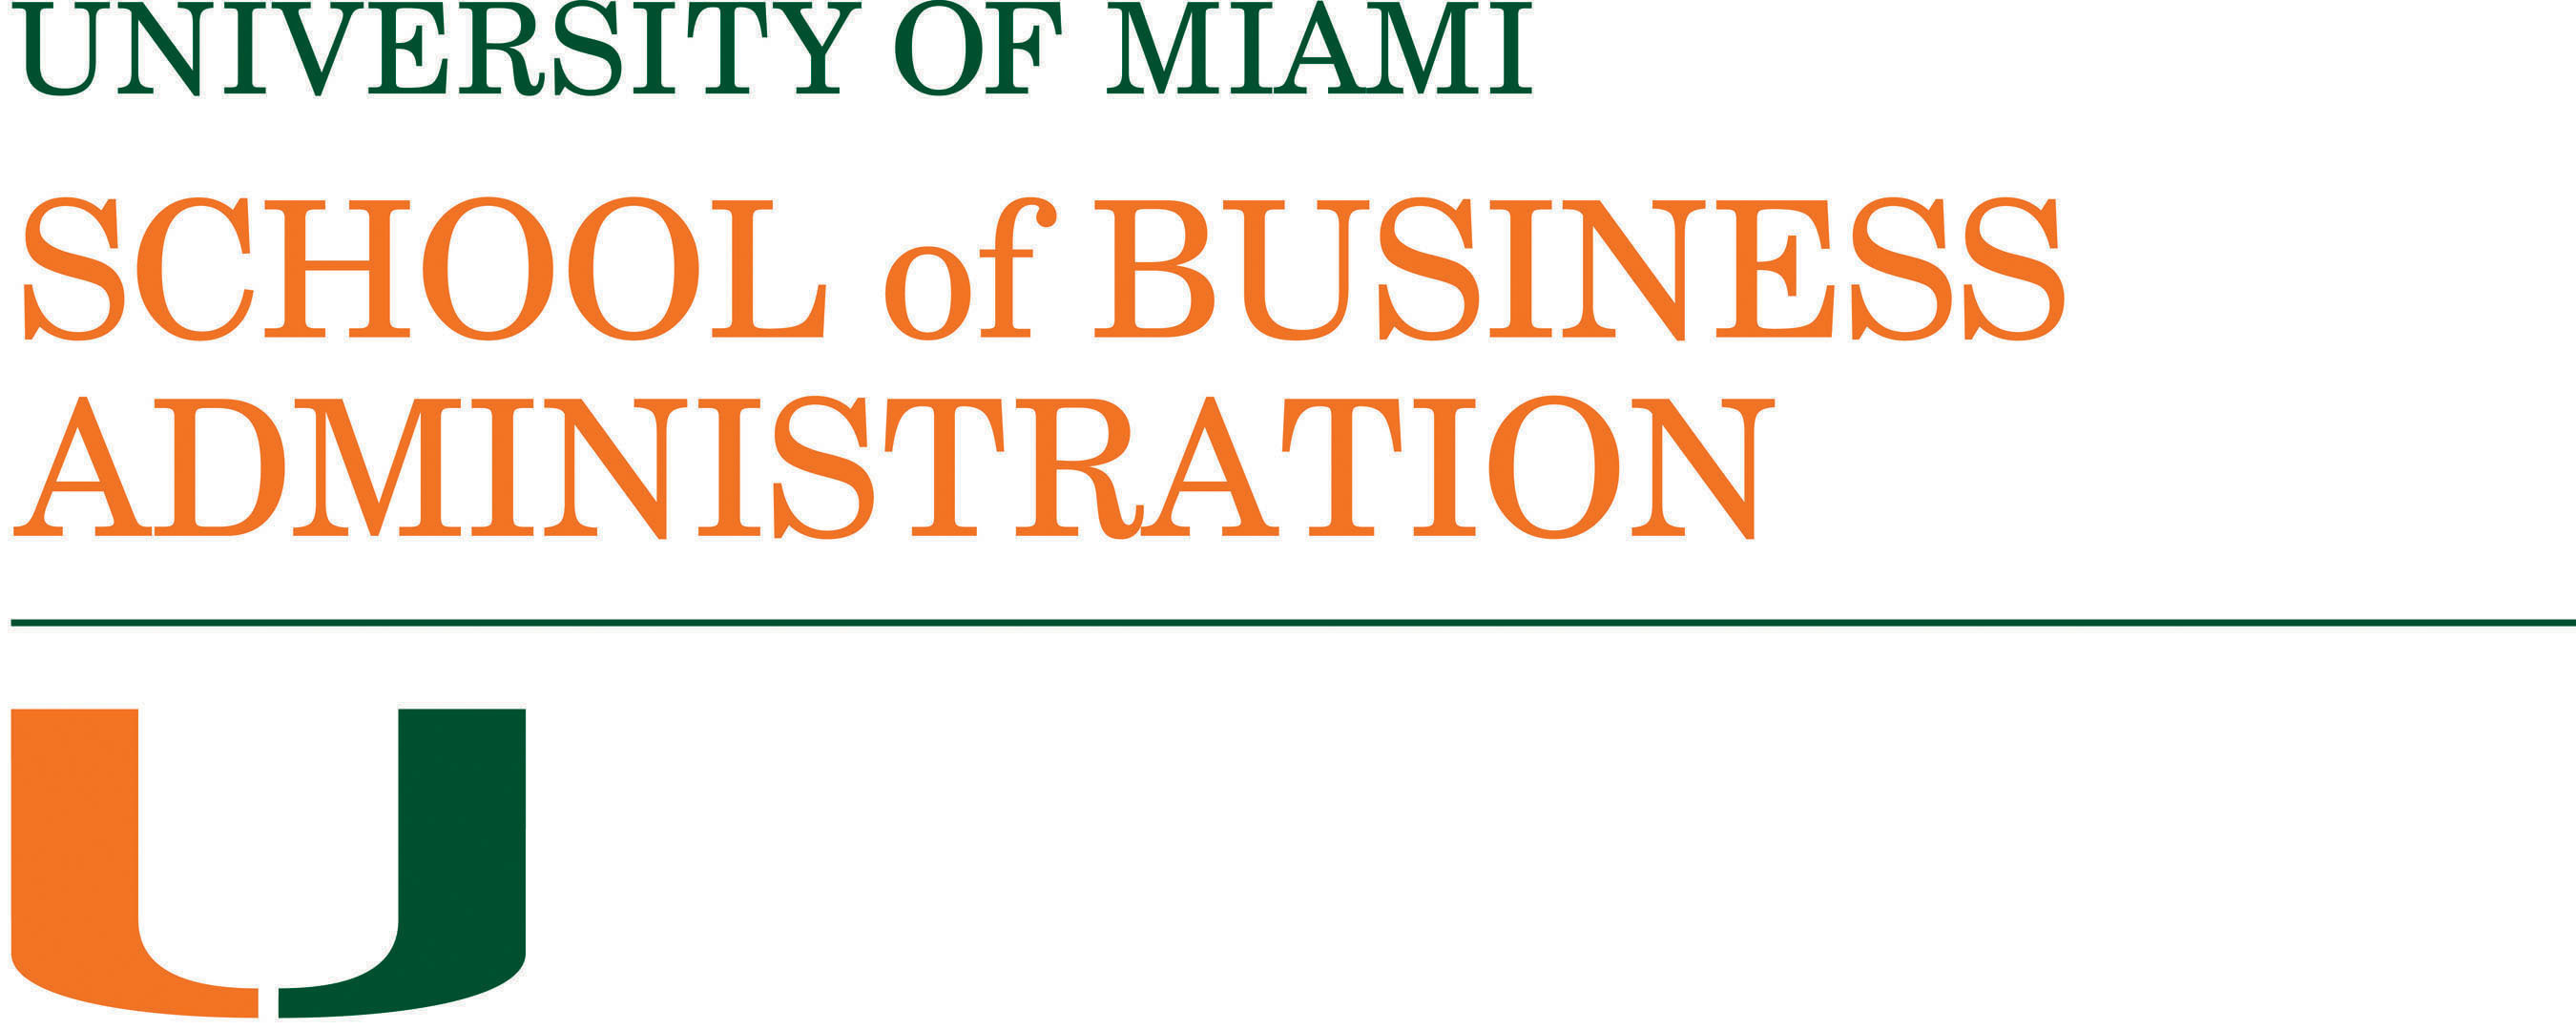 University of Miami School of Business Administration Logo.